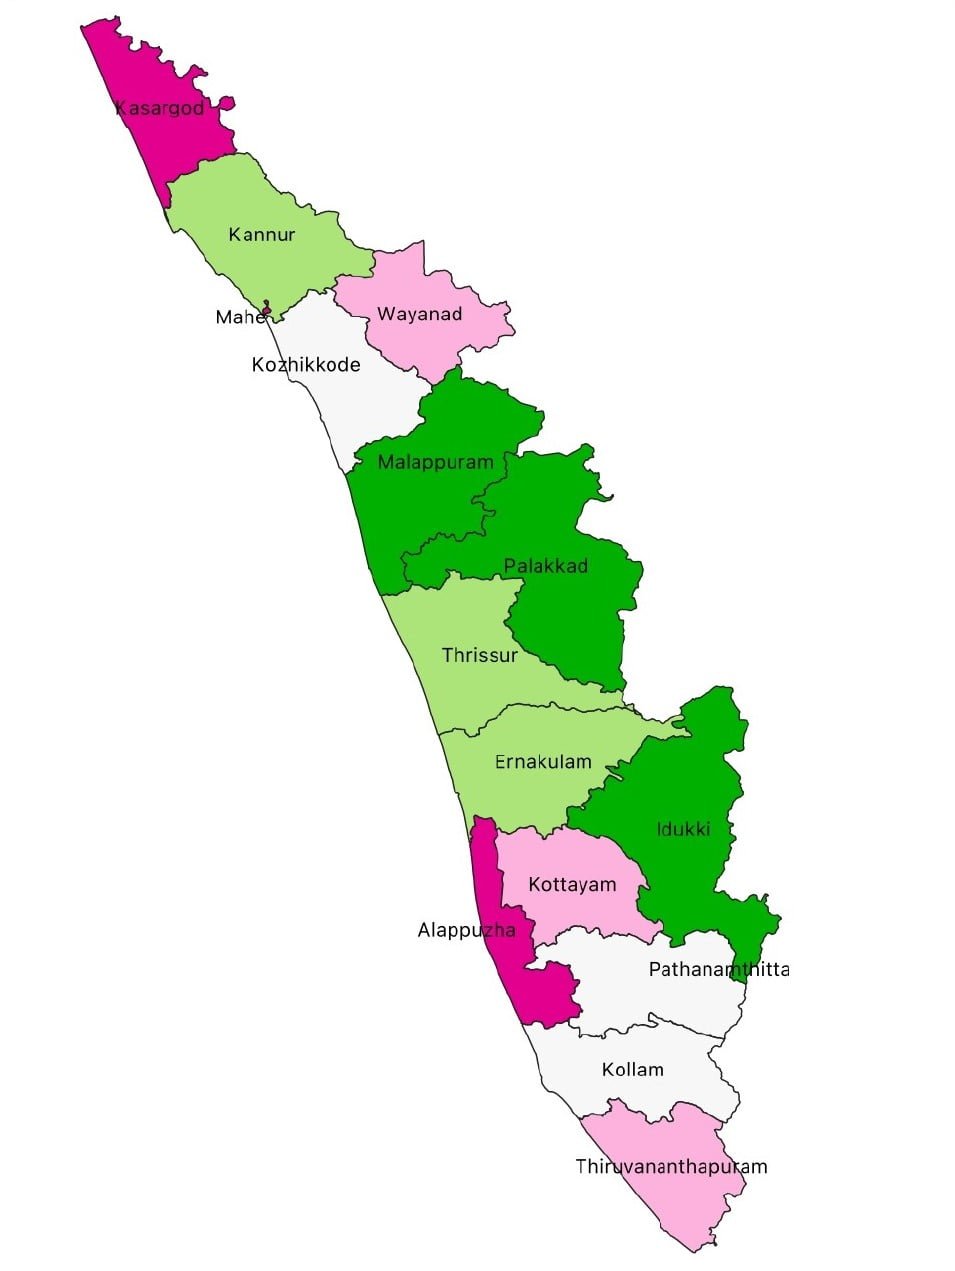 District Map of Kerala